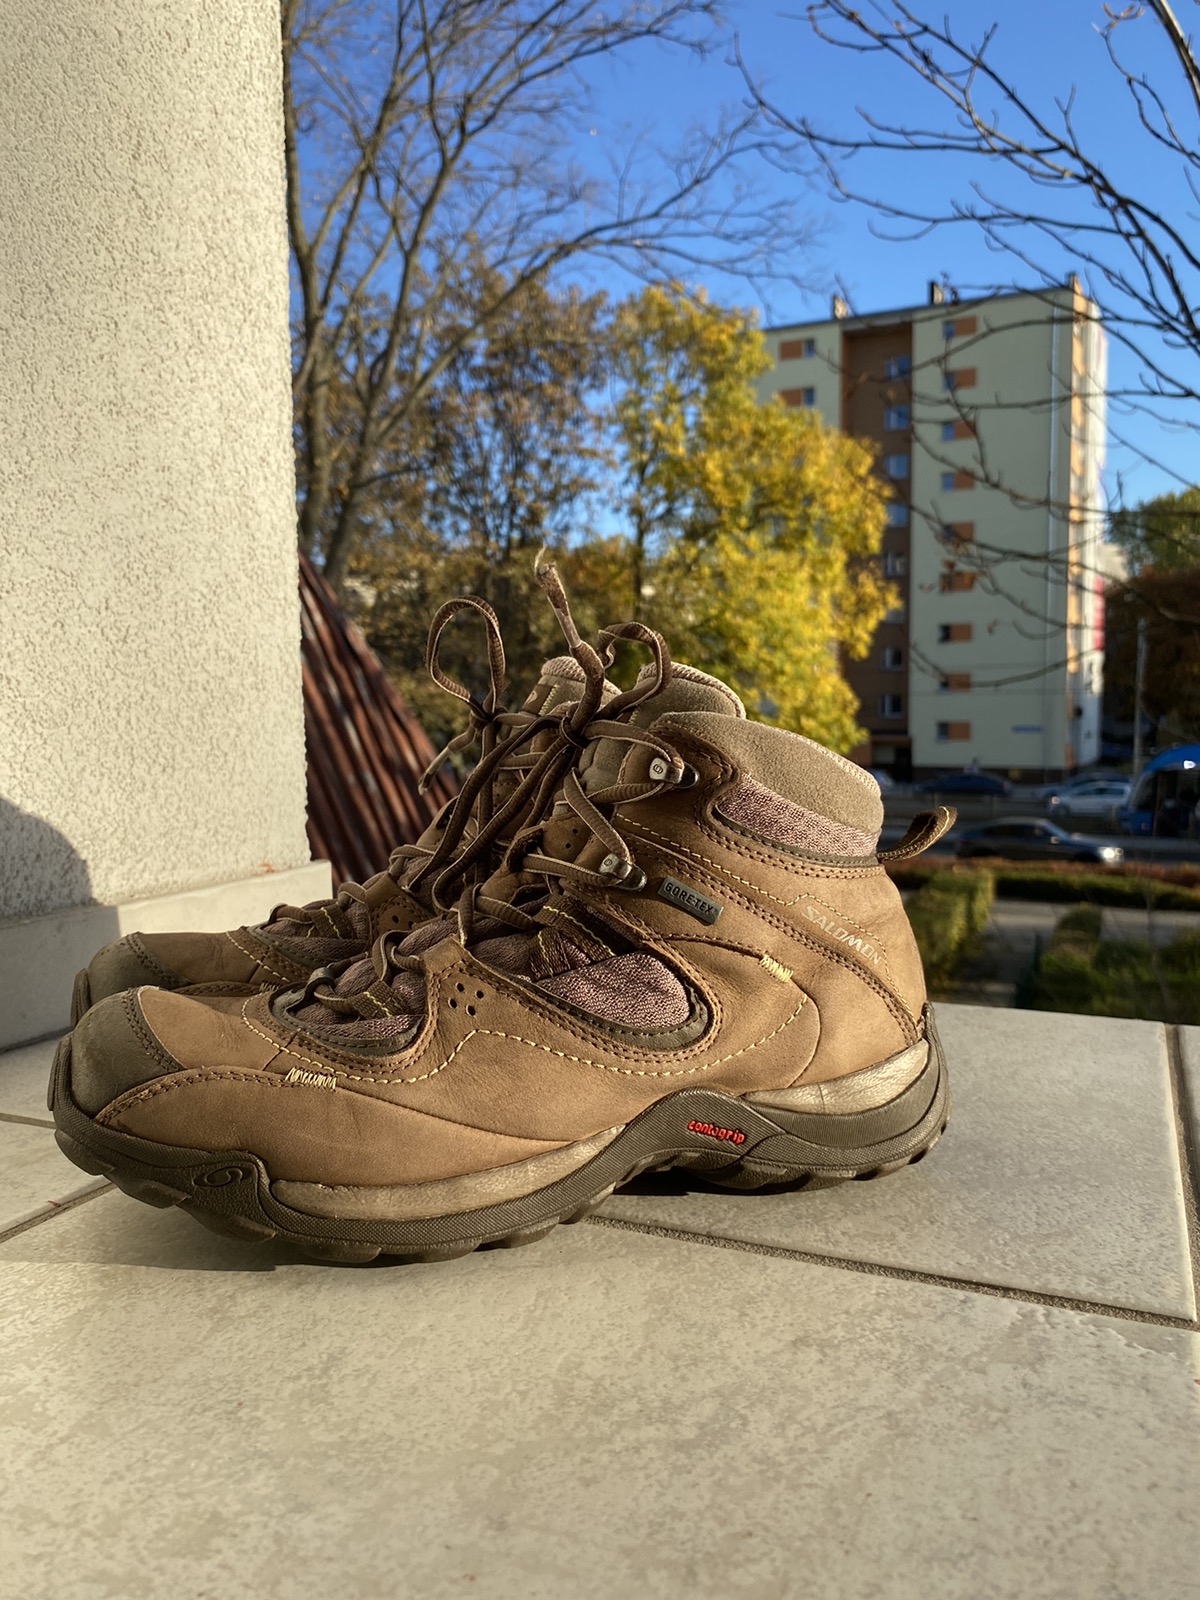 Salomon goretex high boots - 4